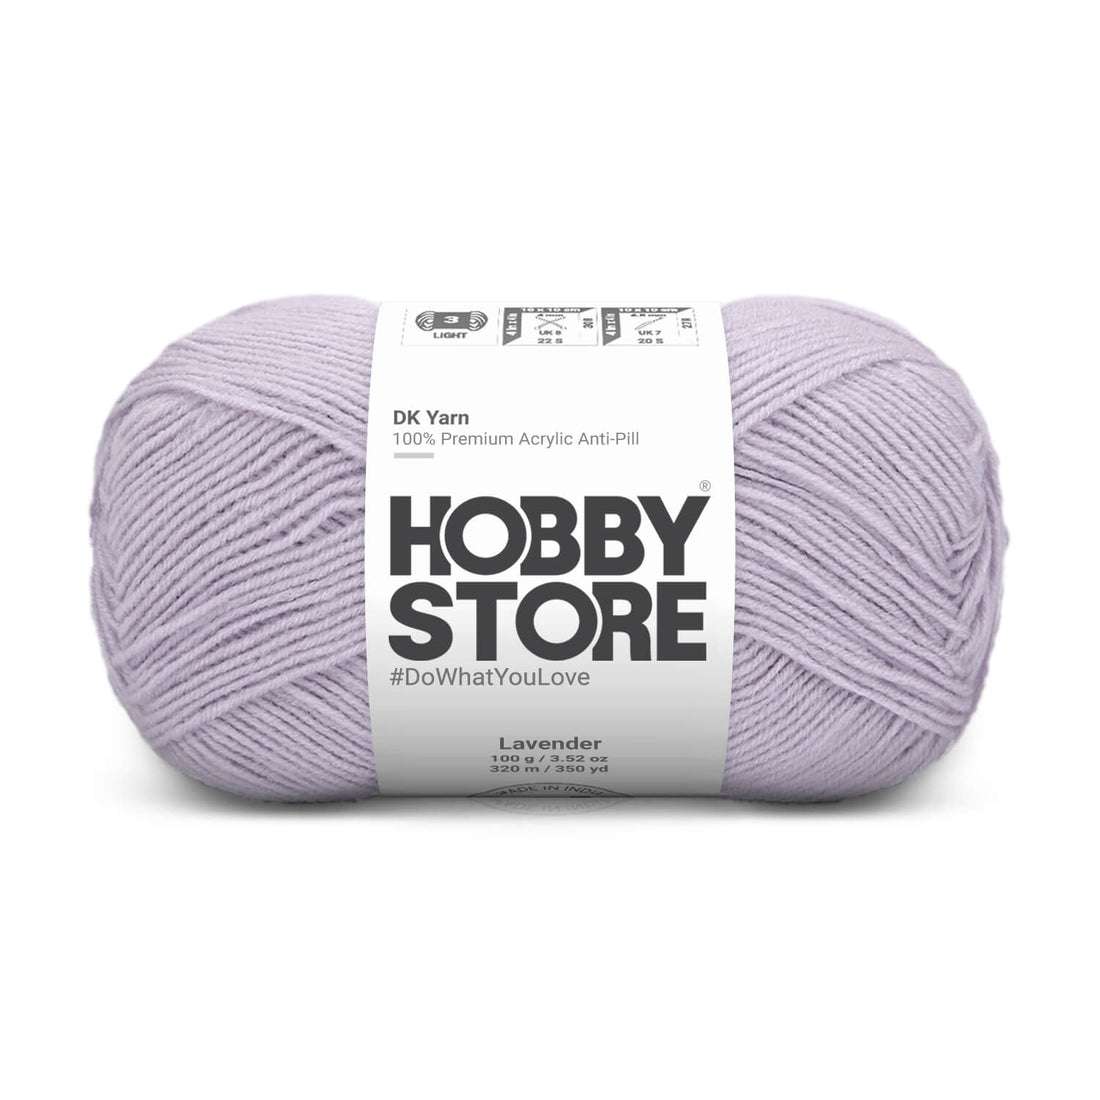 DK Anti-Pill Yarn by Hobby Store - Lavender 5021